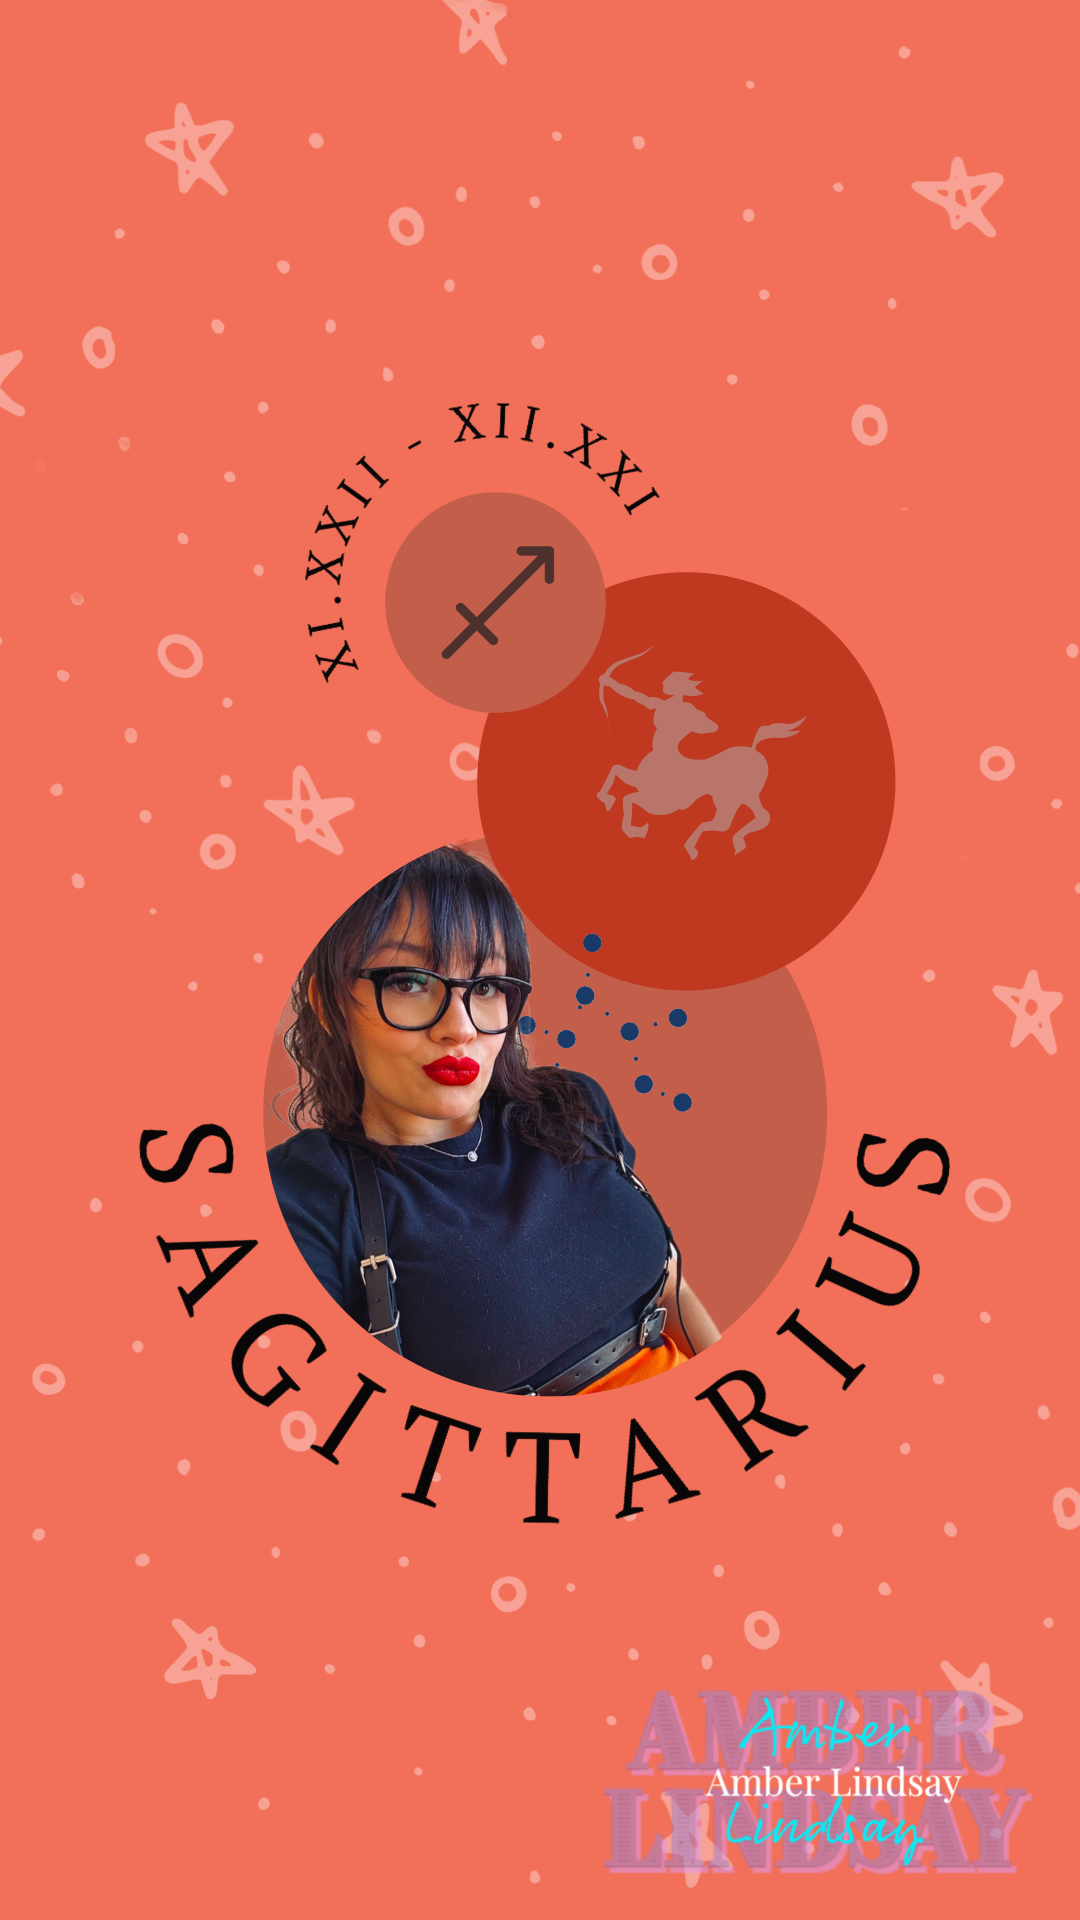 Sagittarius blogger